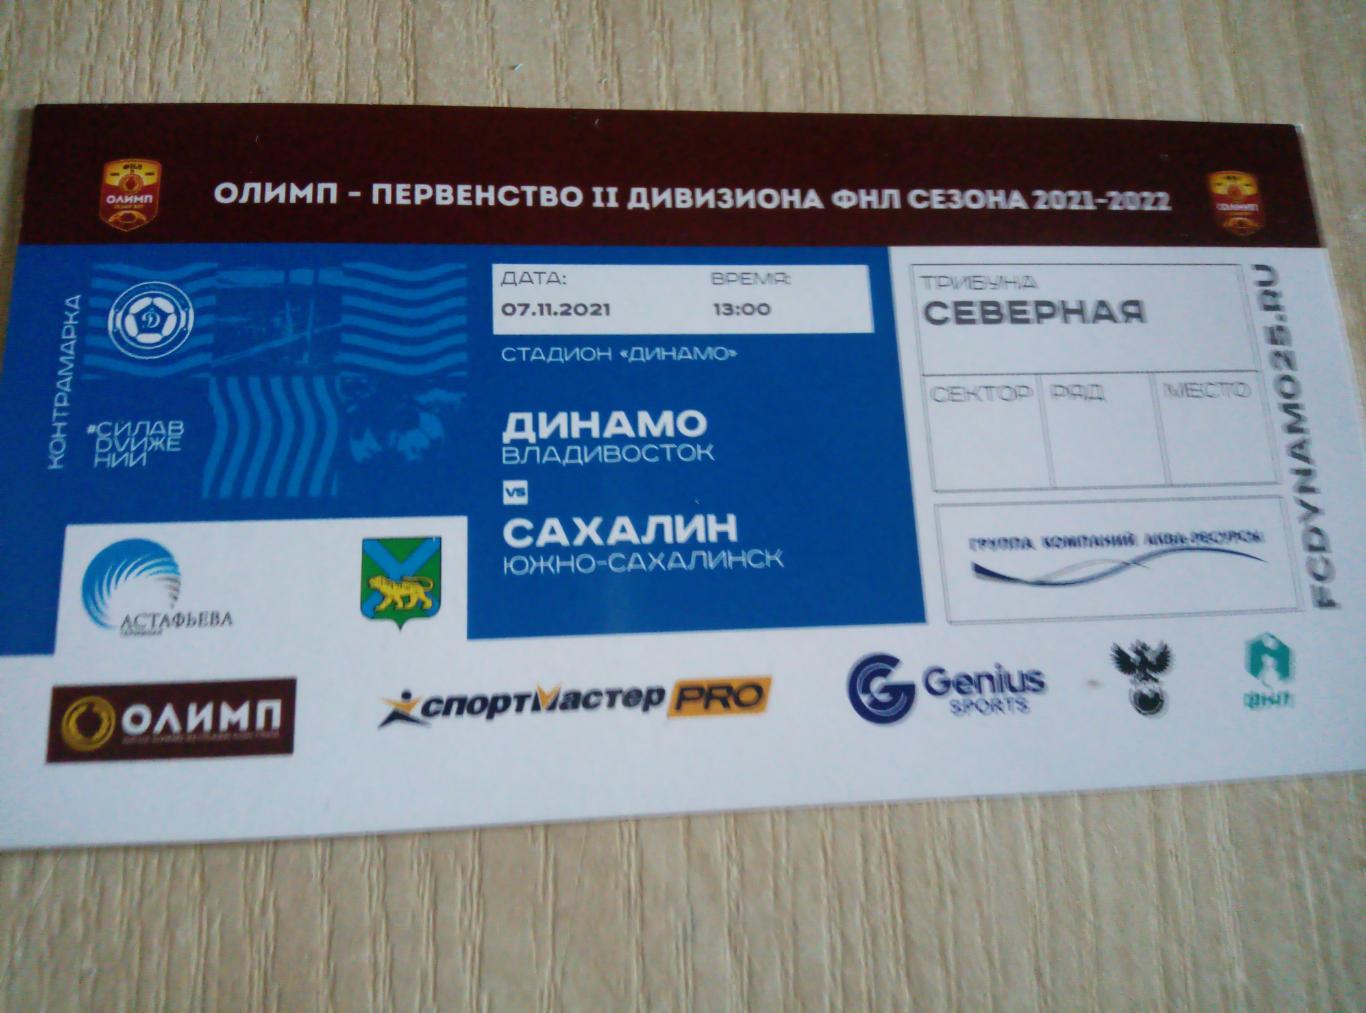 Билет Динамо Владивосток - Сахалин Южно-Сахалинск - 07.11.2021